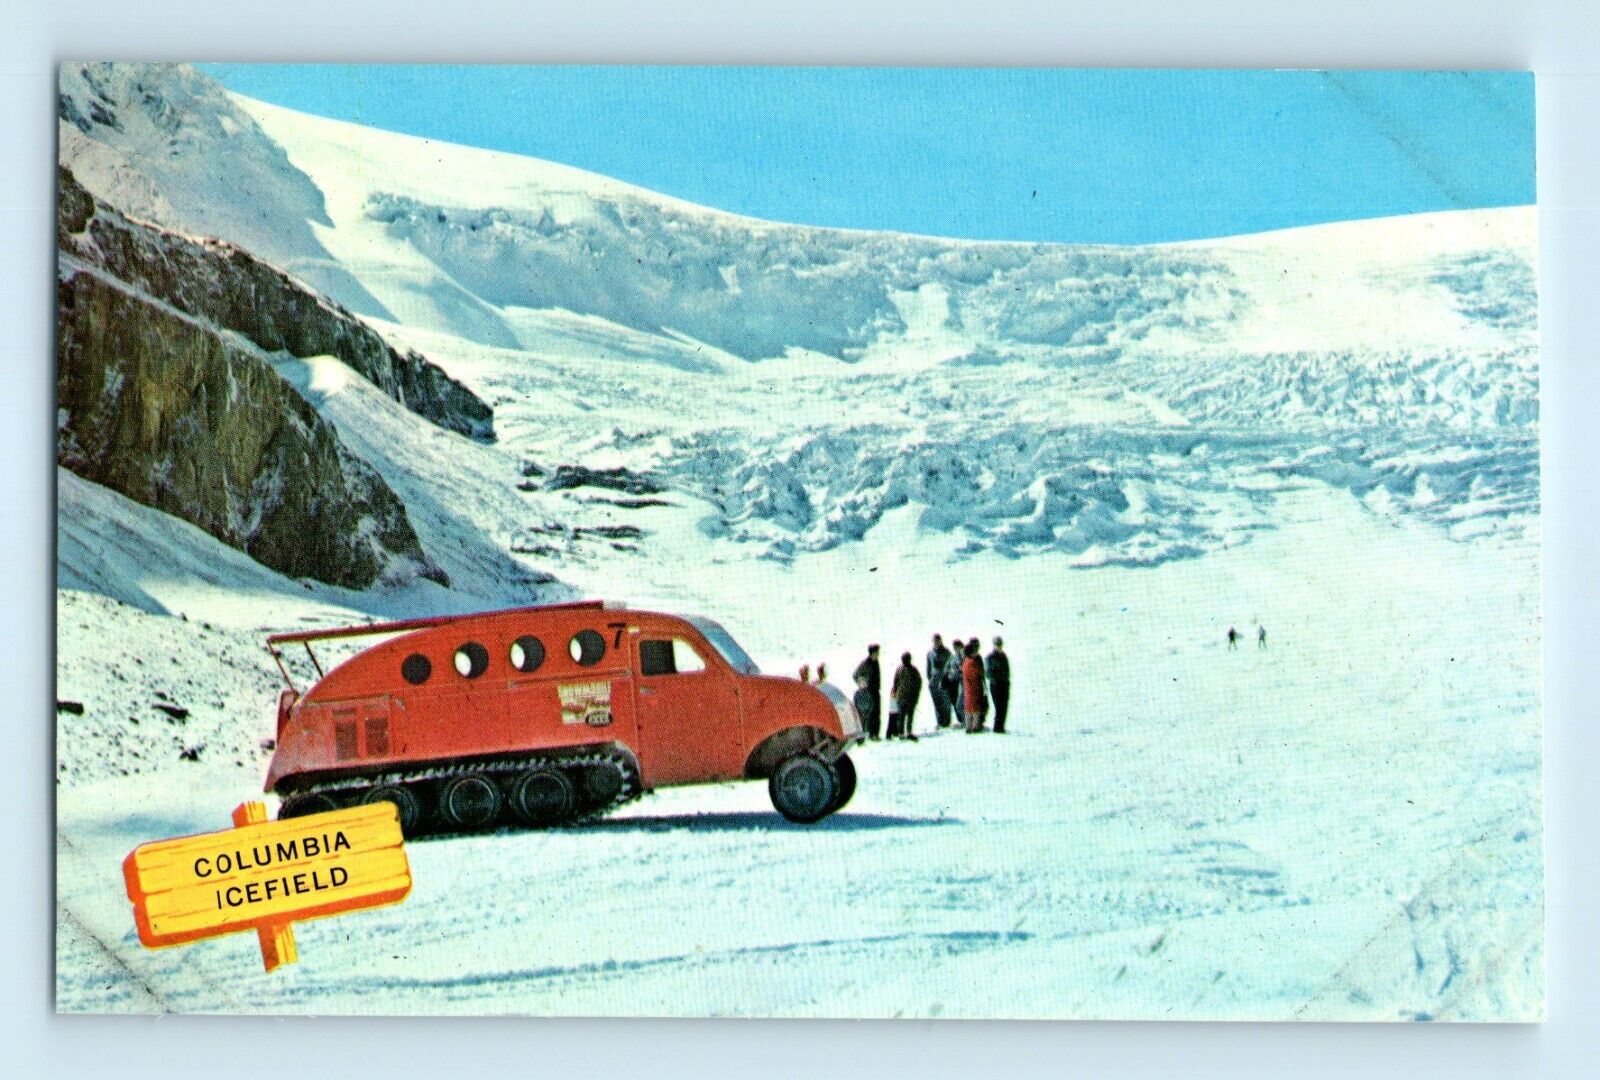 Snowmobile Car Columbia Icefield Athabasca Glacier Jasper Natio Park Postcard C4